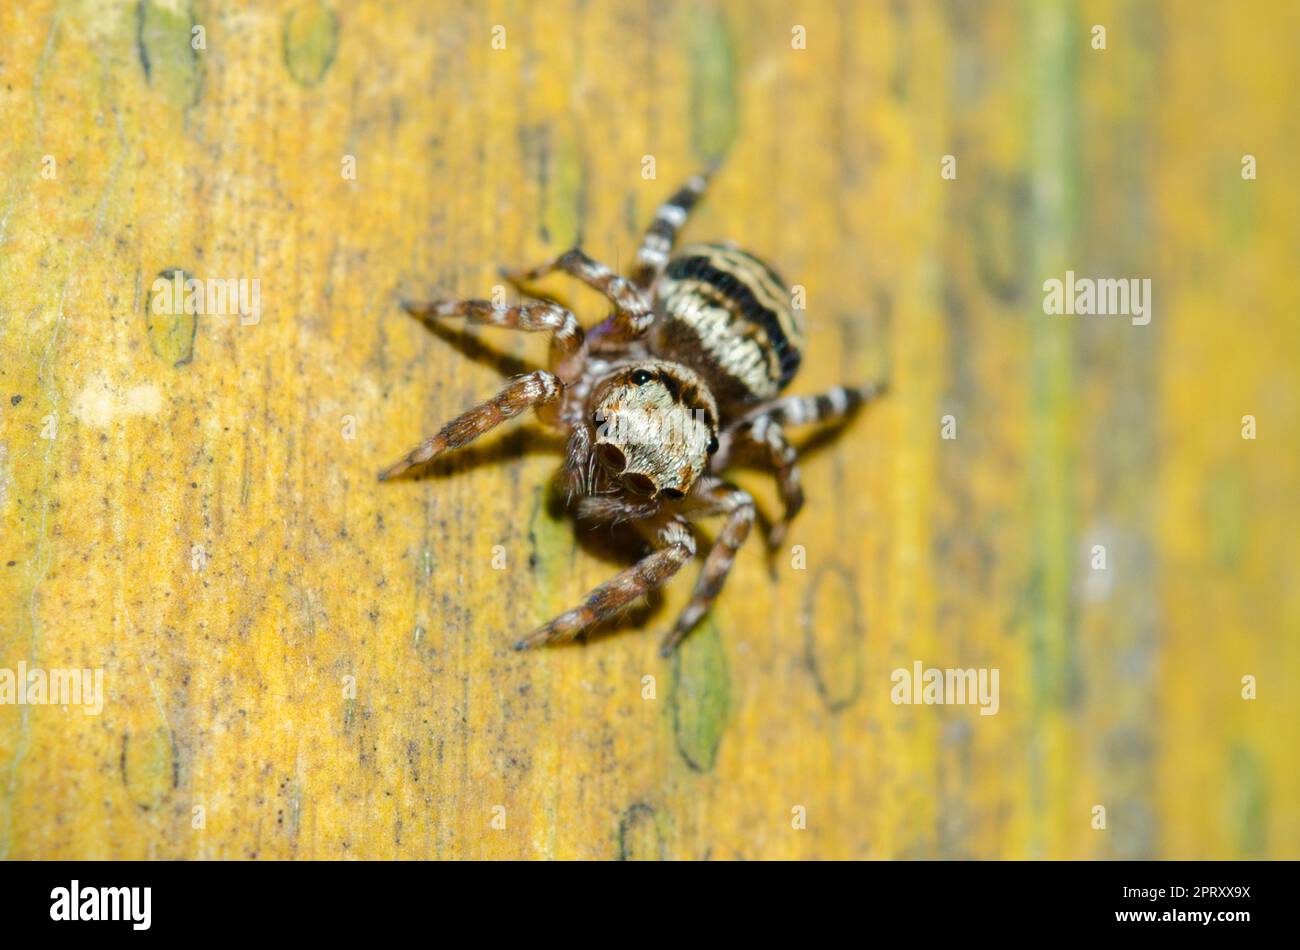 Female Sword-Bearing Thorelliola Spider, Thorelliola Ensifera, on tree, Klungkung, Bali, Indonesia Stock Photo